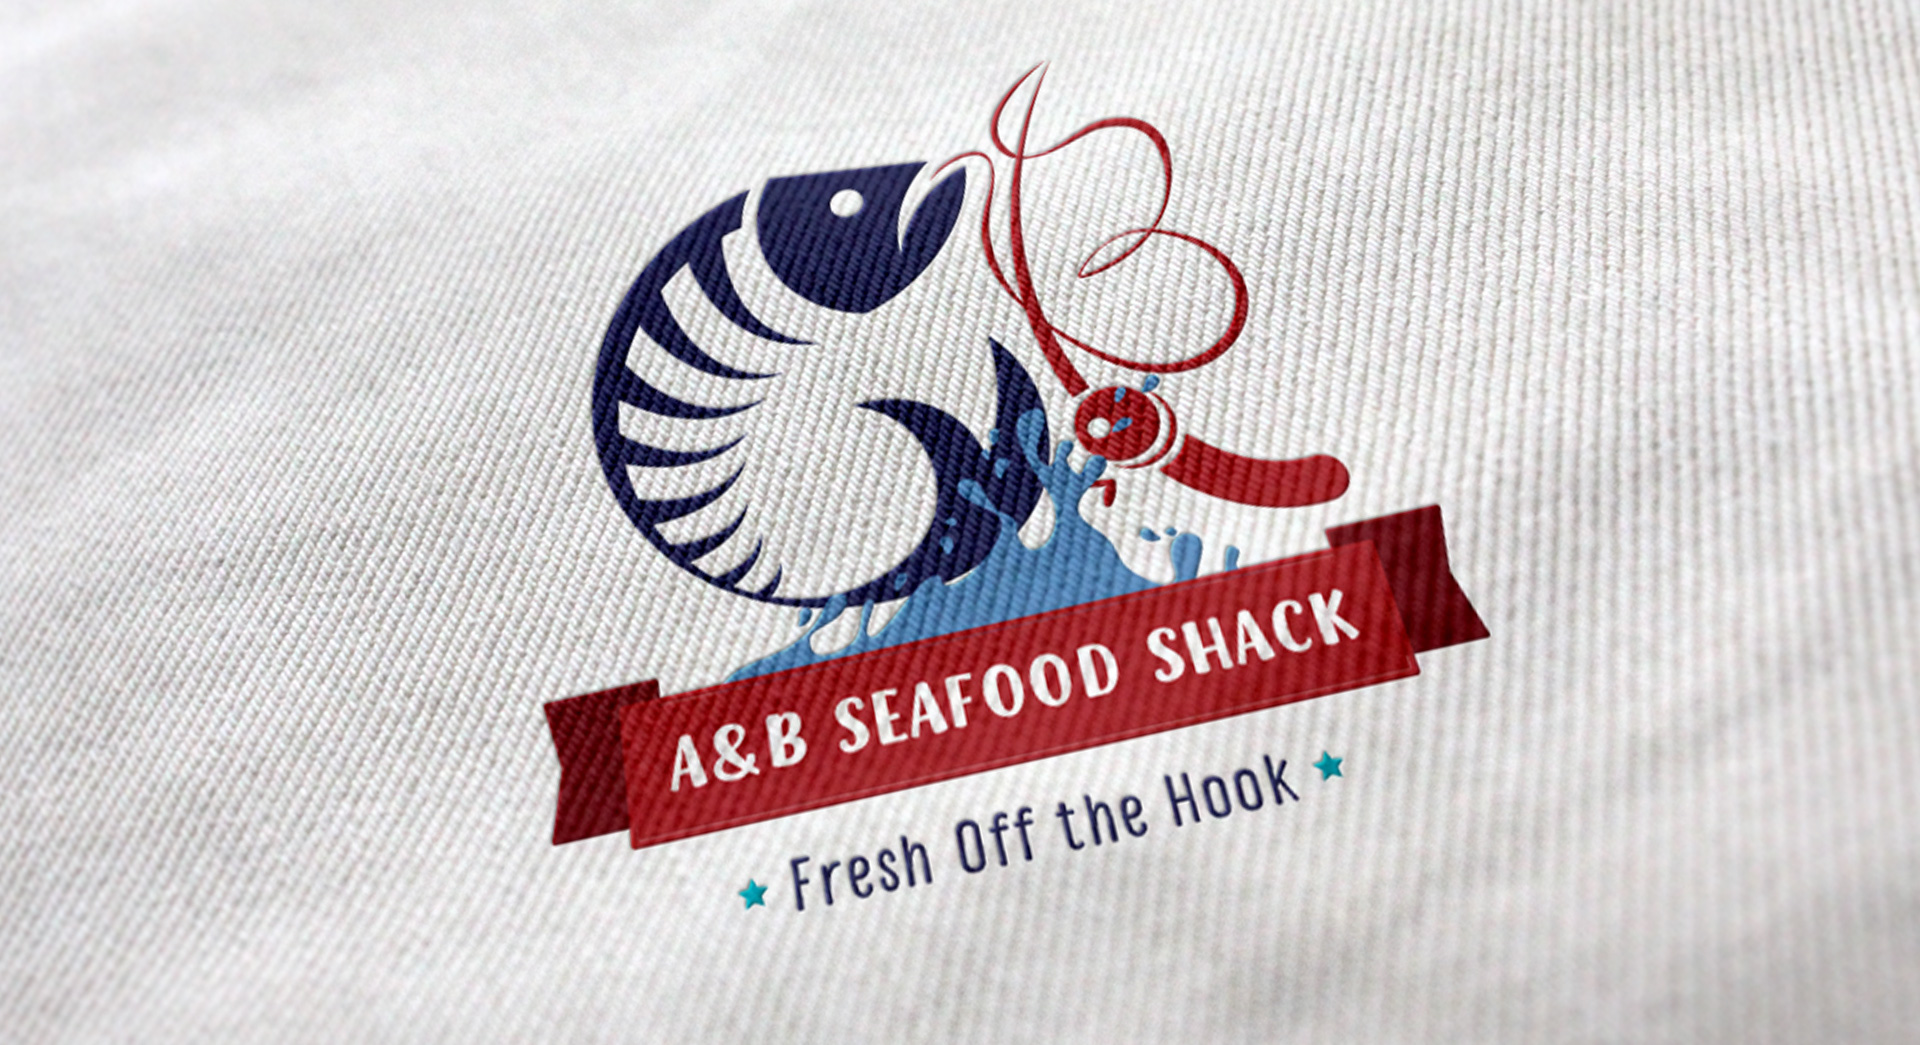 Seafood Shack logo textile